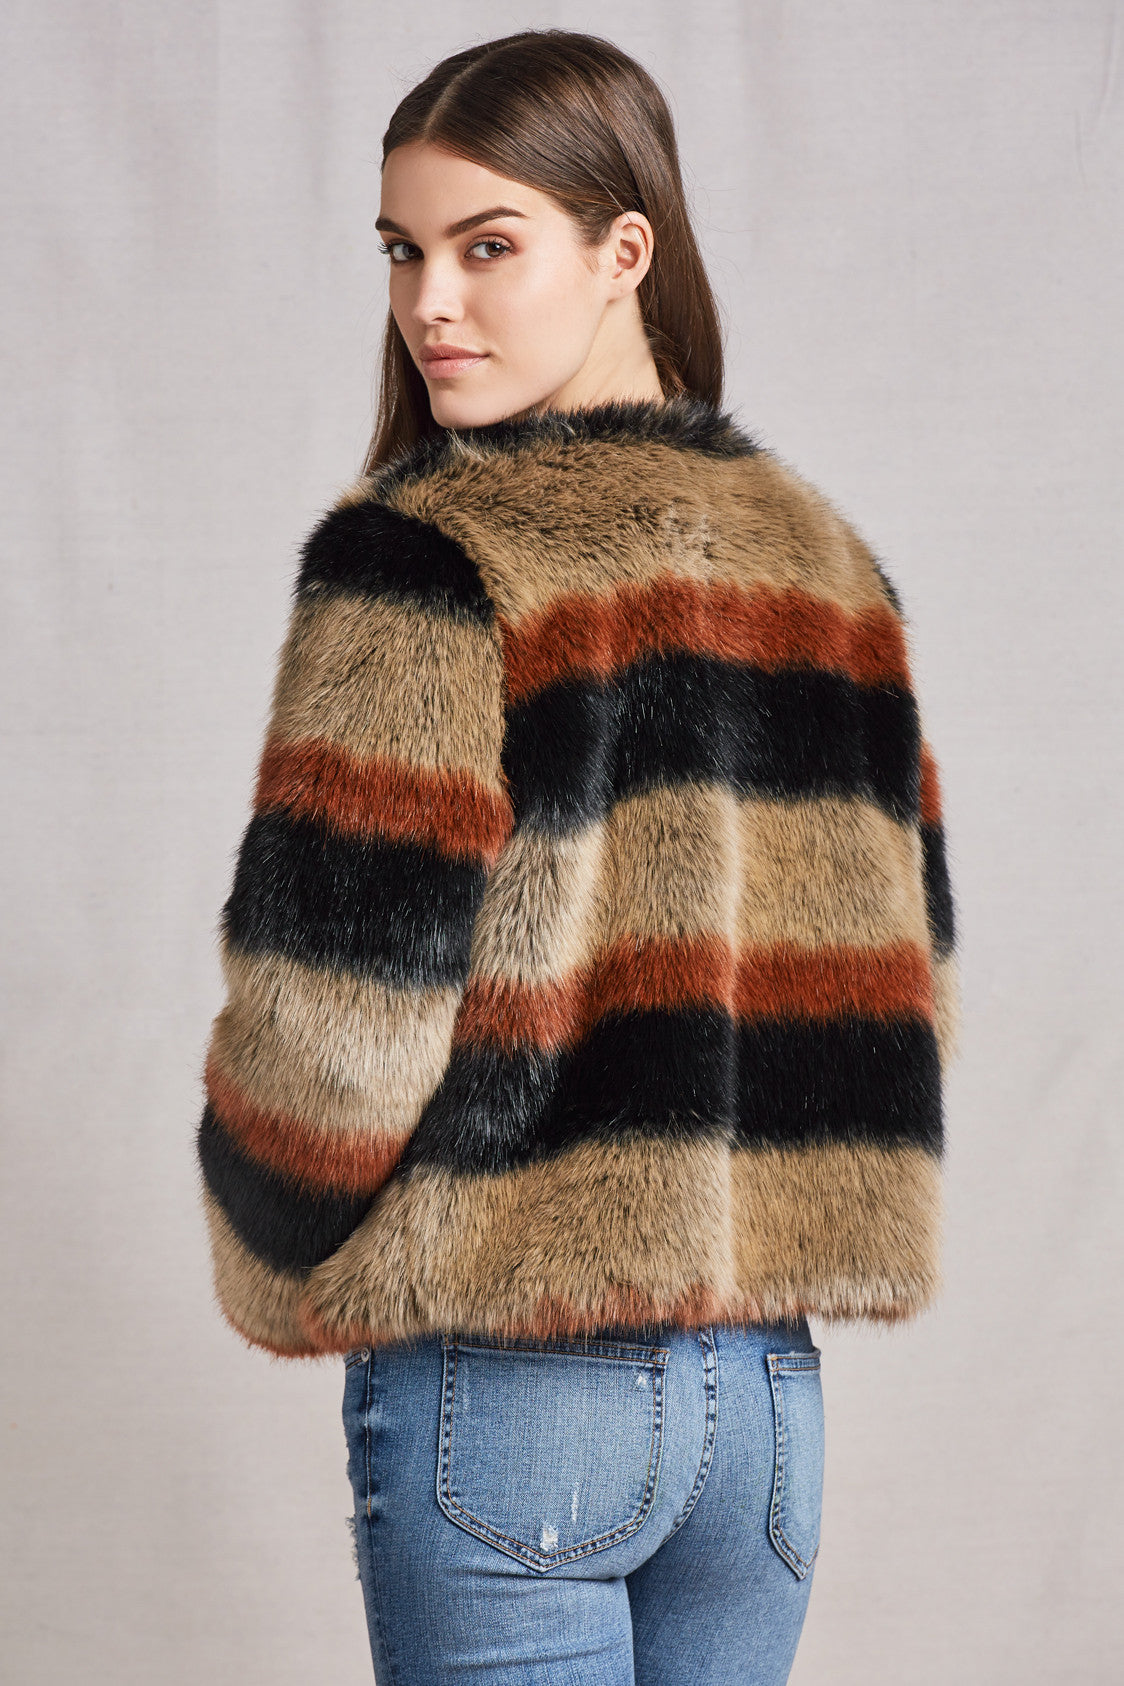 Harkin Fur Jacket in Multi 70s Stripe – TULAROSA (a Revolve Group company)